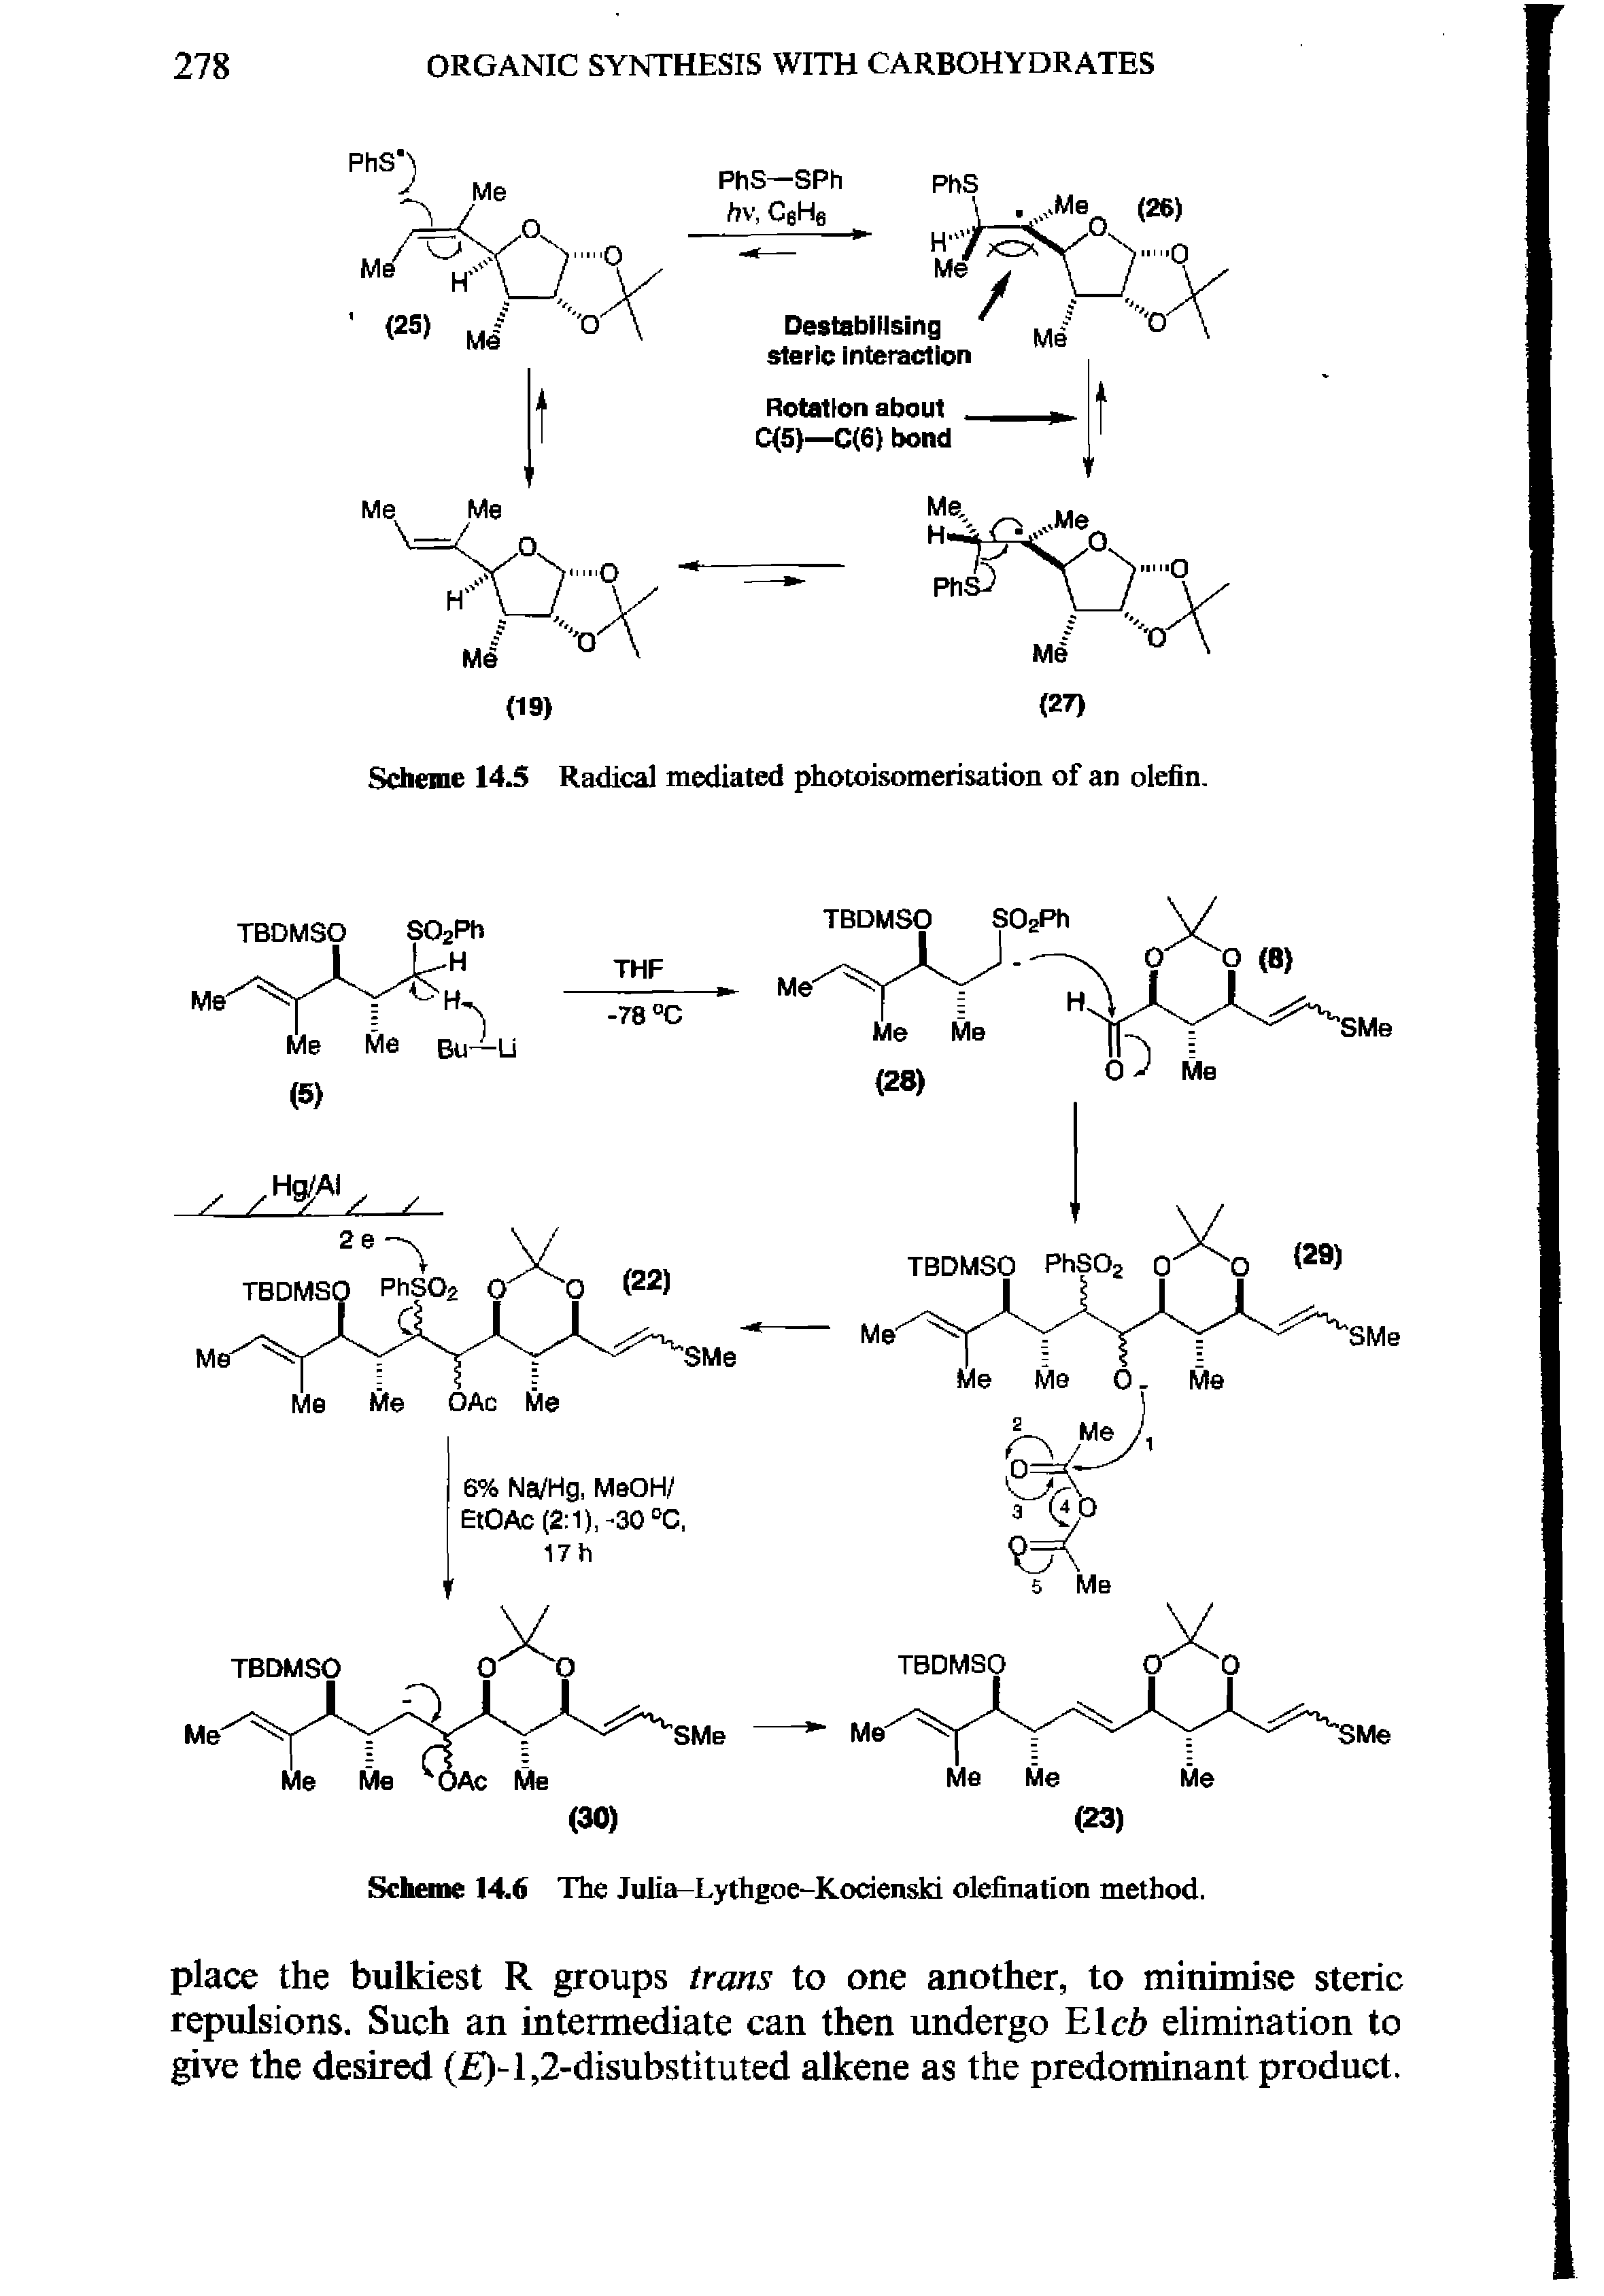 Scheme 14.6 The Julia-Lythgoe-Kocienski olefination method.